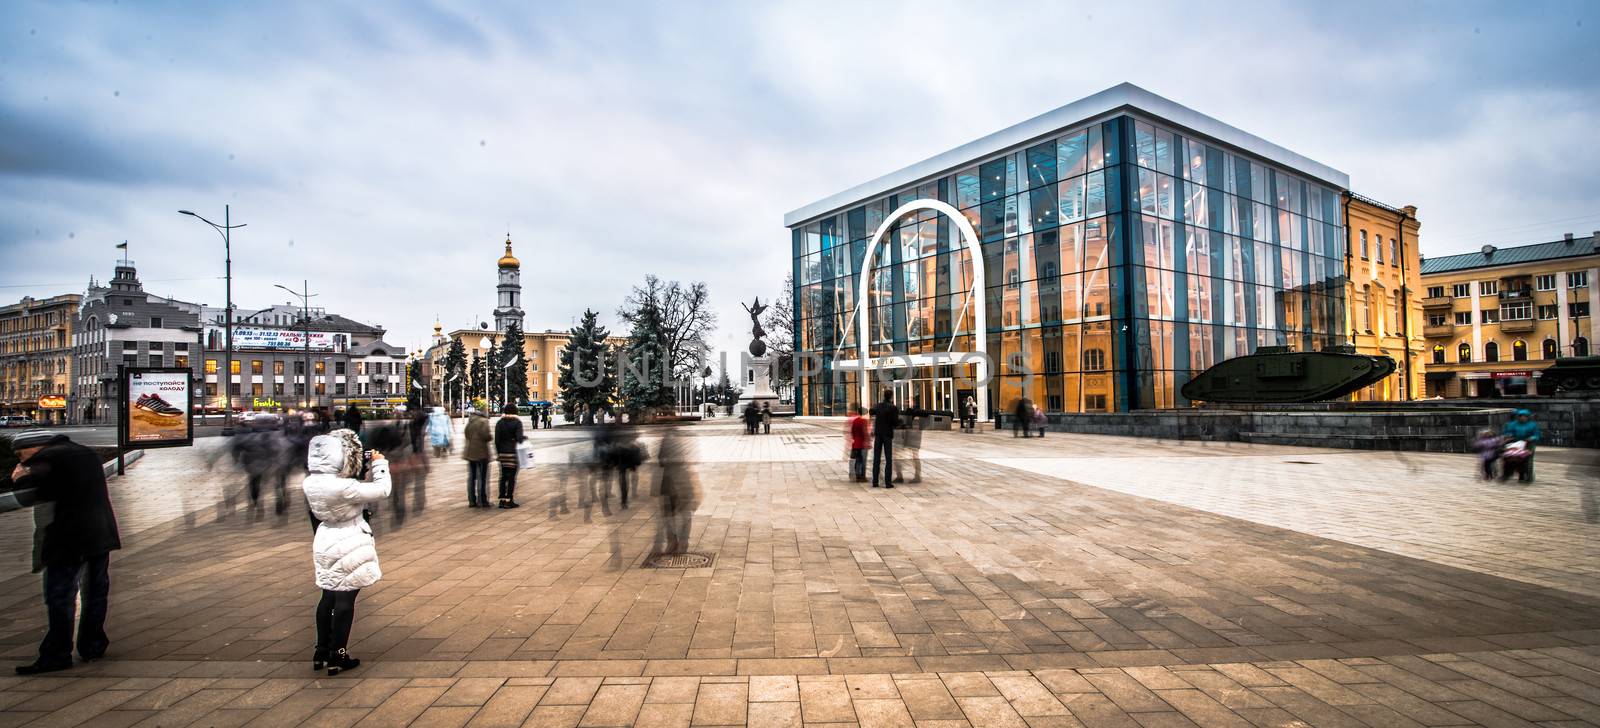 Constitution Square in Kharkiv by GekaSkr